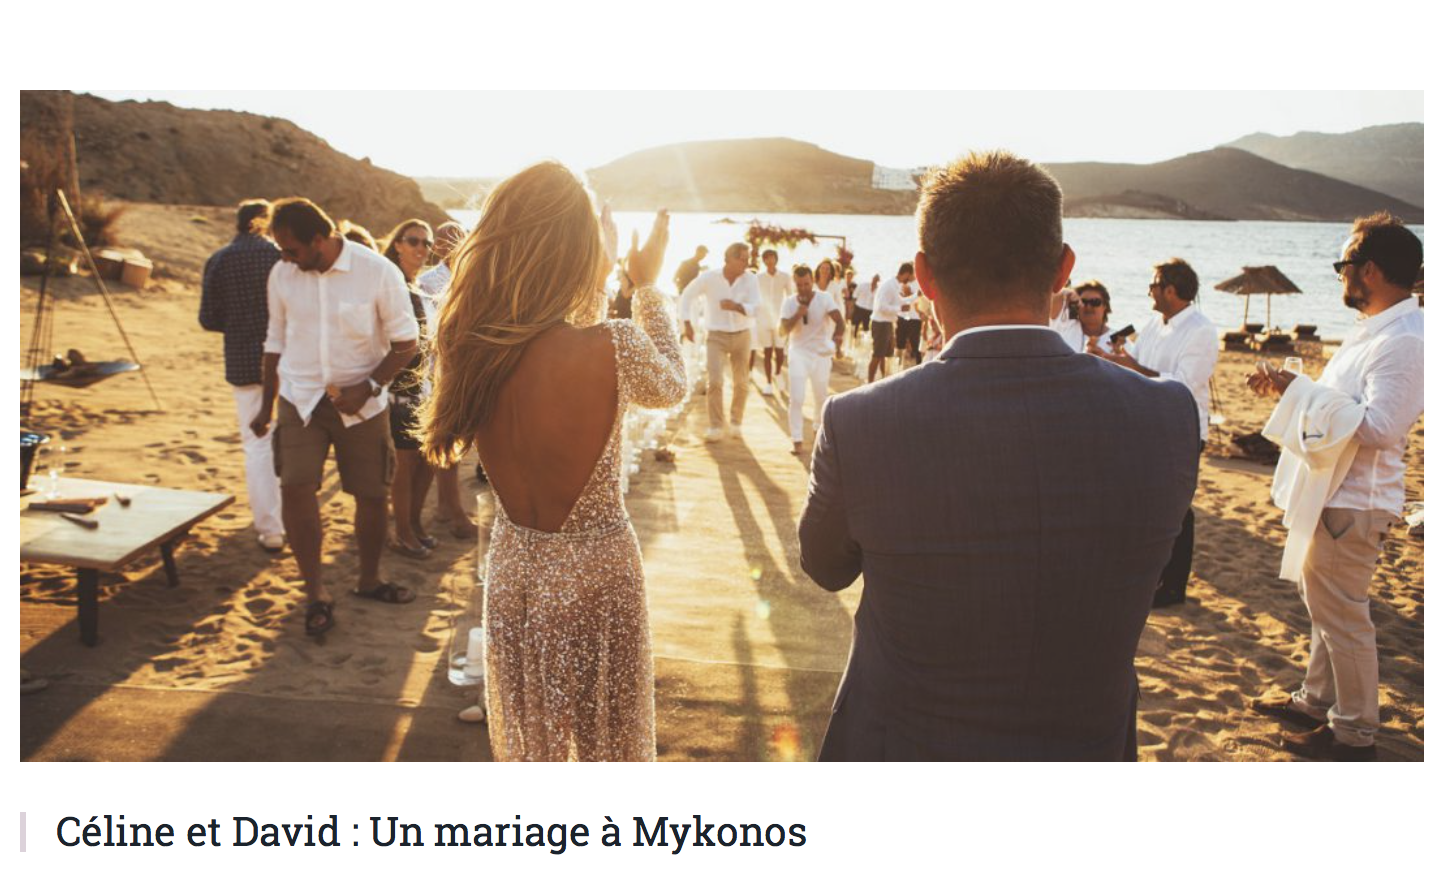 Wedding Magazine – Mariage de Céline et David